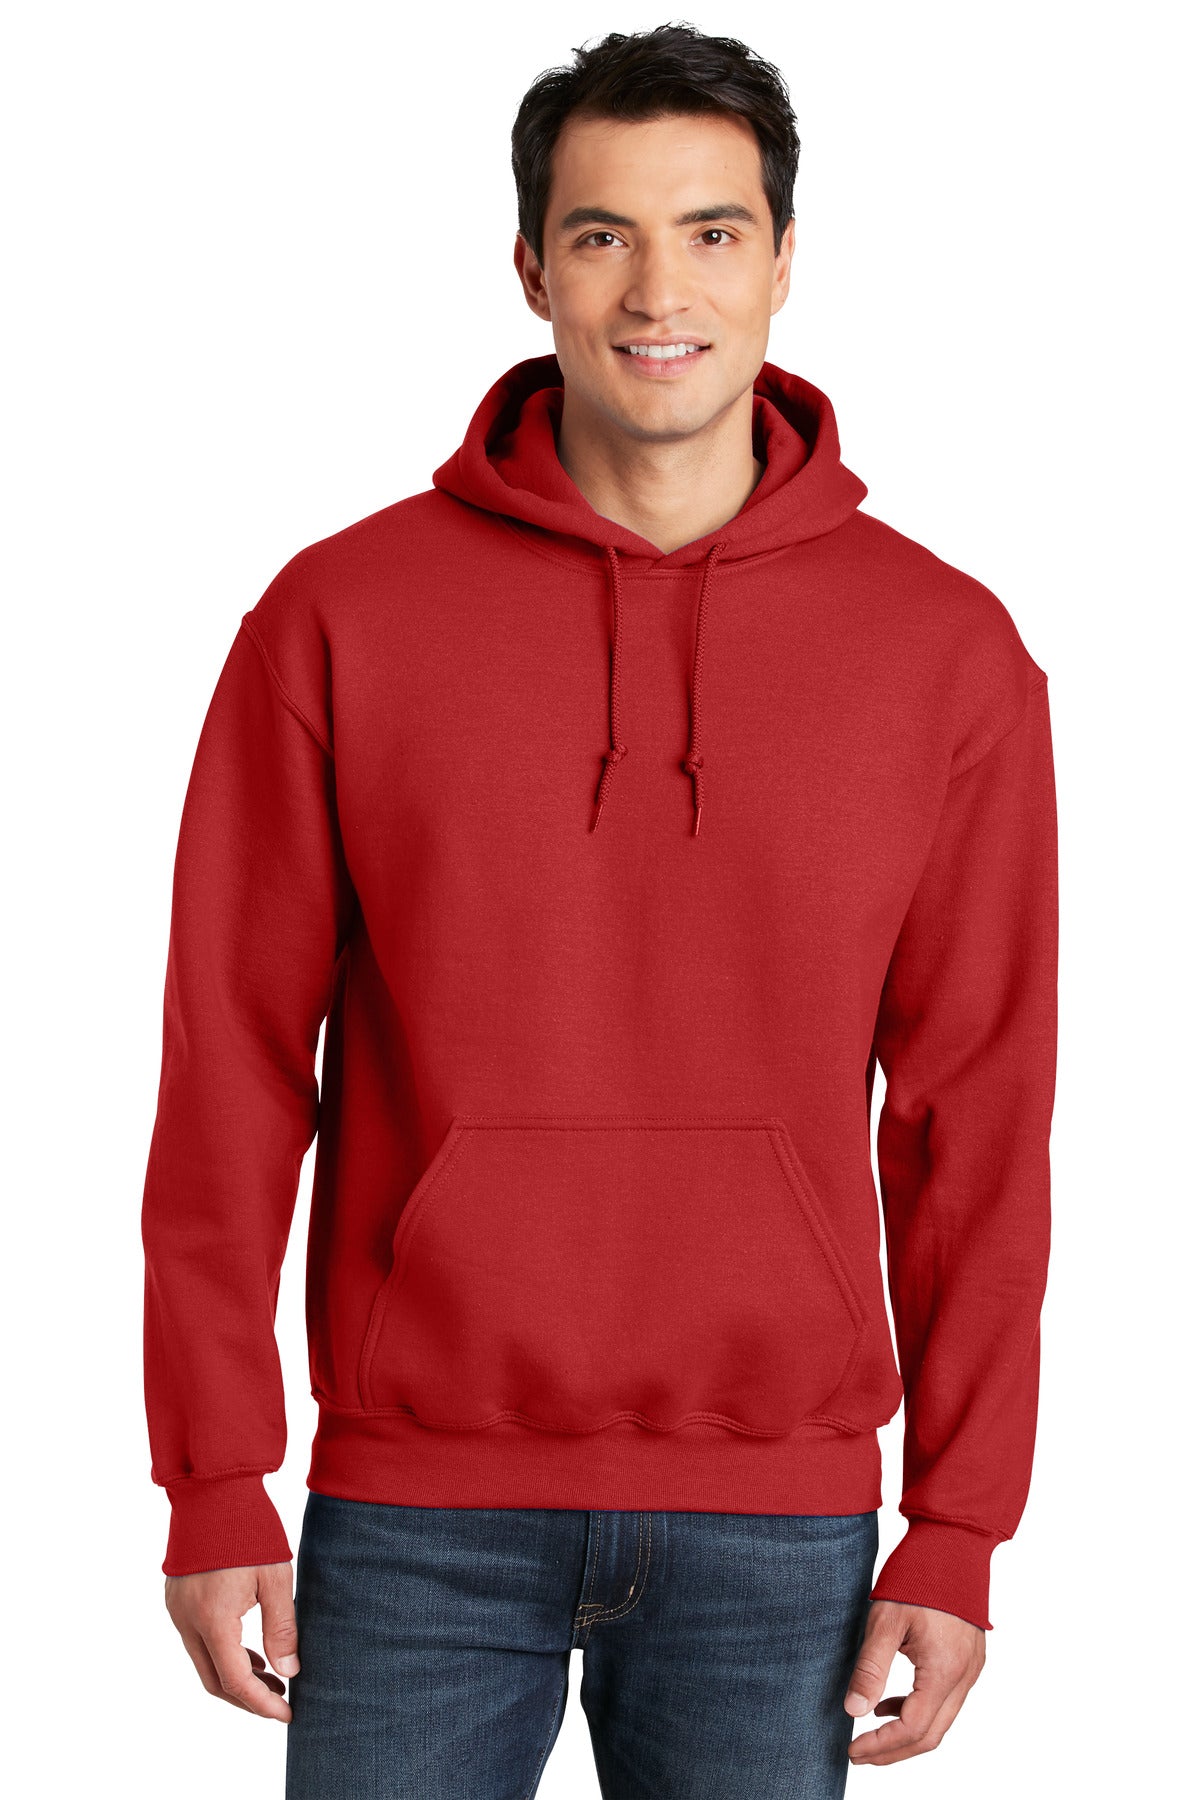 Gildan - DryBlend Pullover Hooded Sweatshirt. 12500